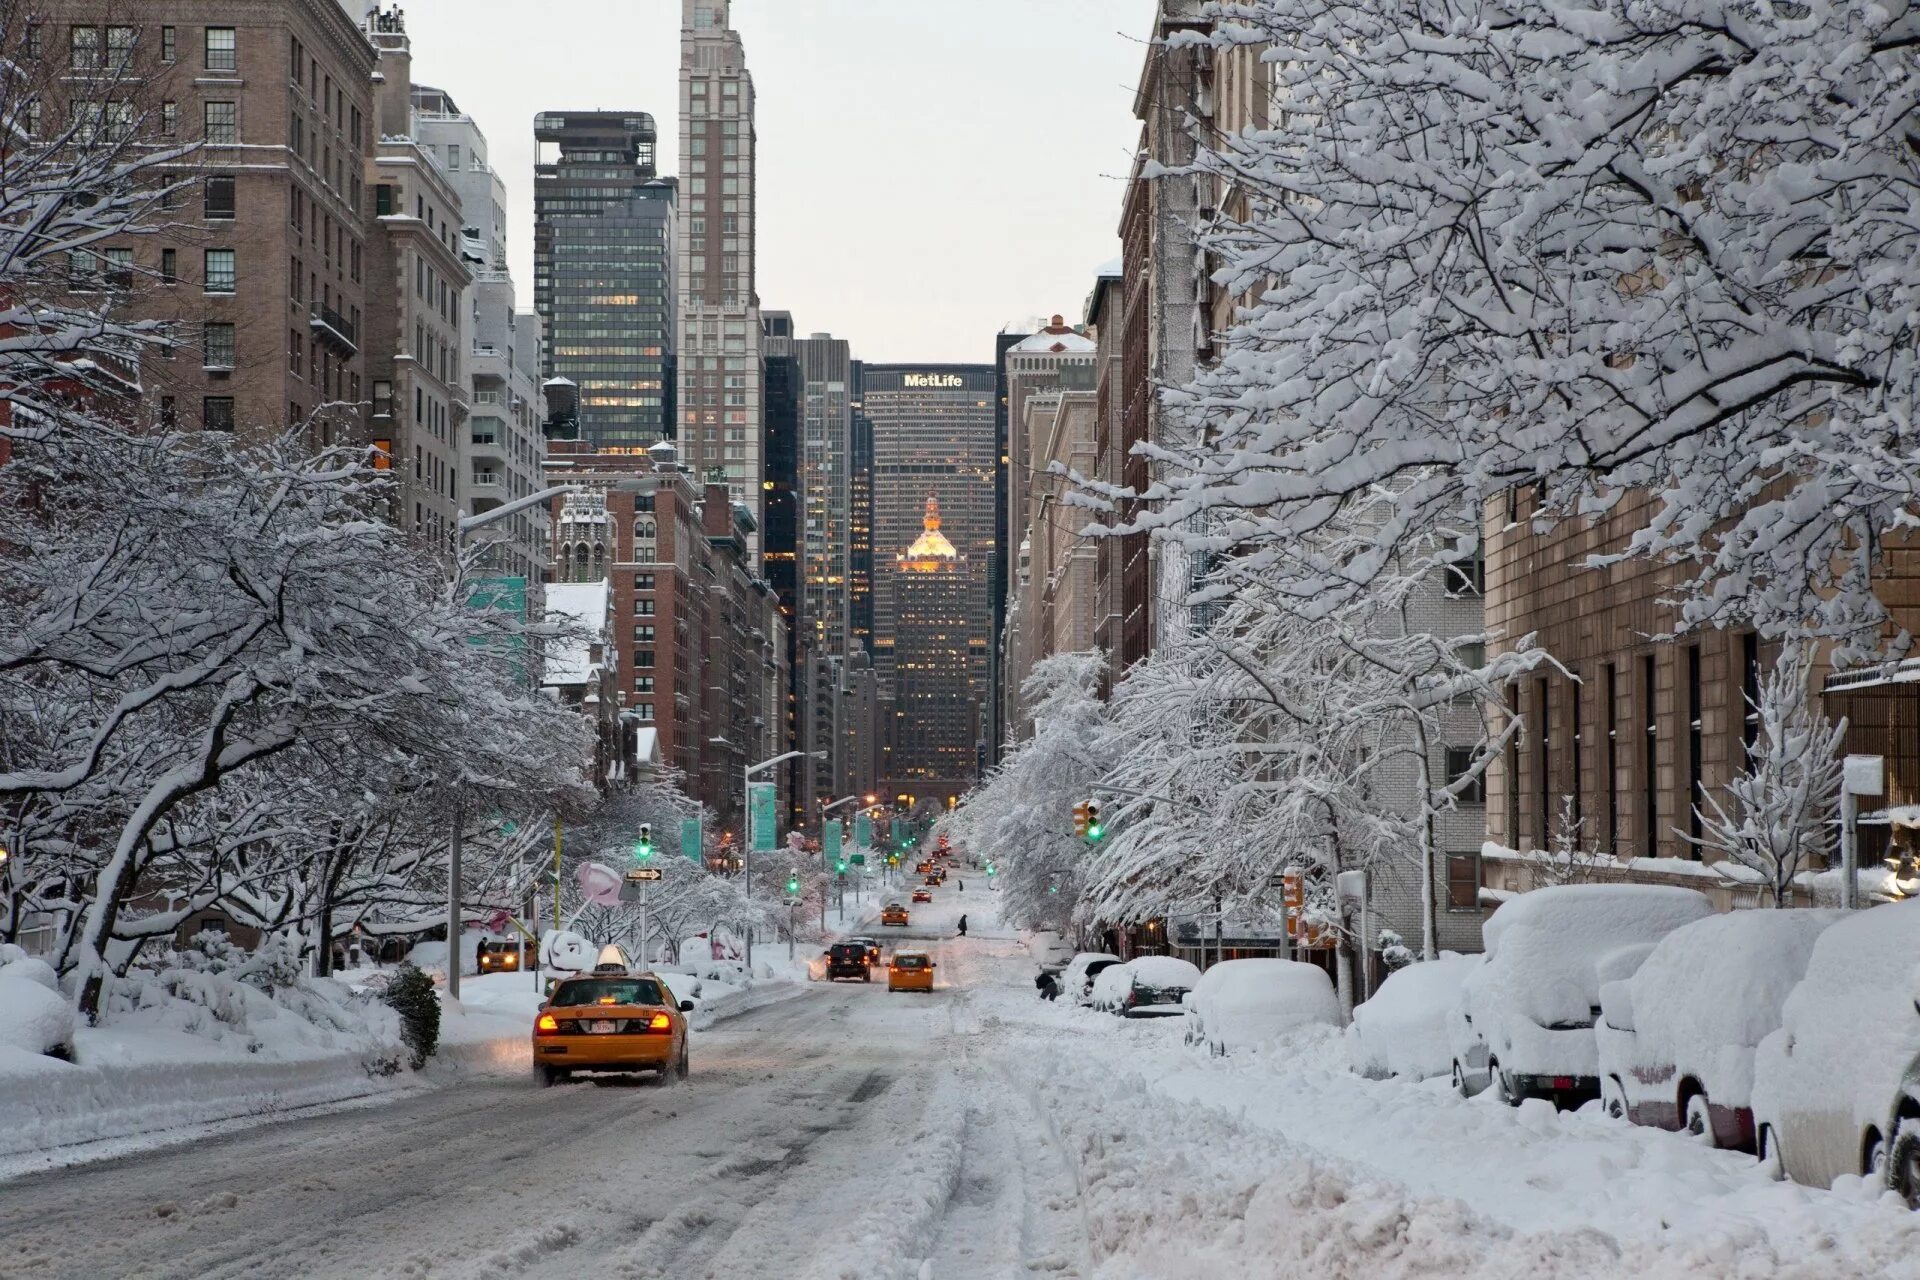 Города где зимою. Нью-Йорк Квинс улицы зимой. Зимний Нью-Йорк 5 Авеню. Нью-Йорк Манхеттен улицы снег. Нью Йорк зимний Манхэттен.